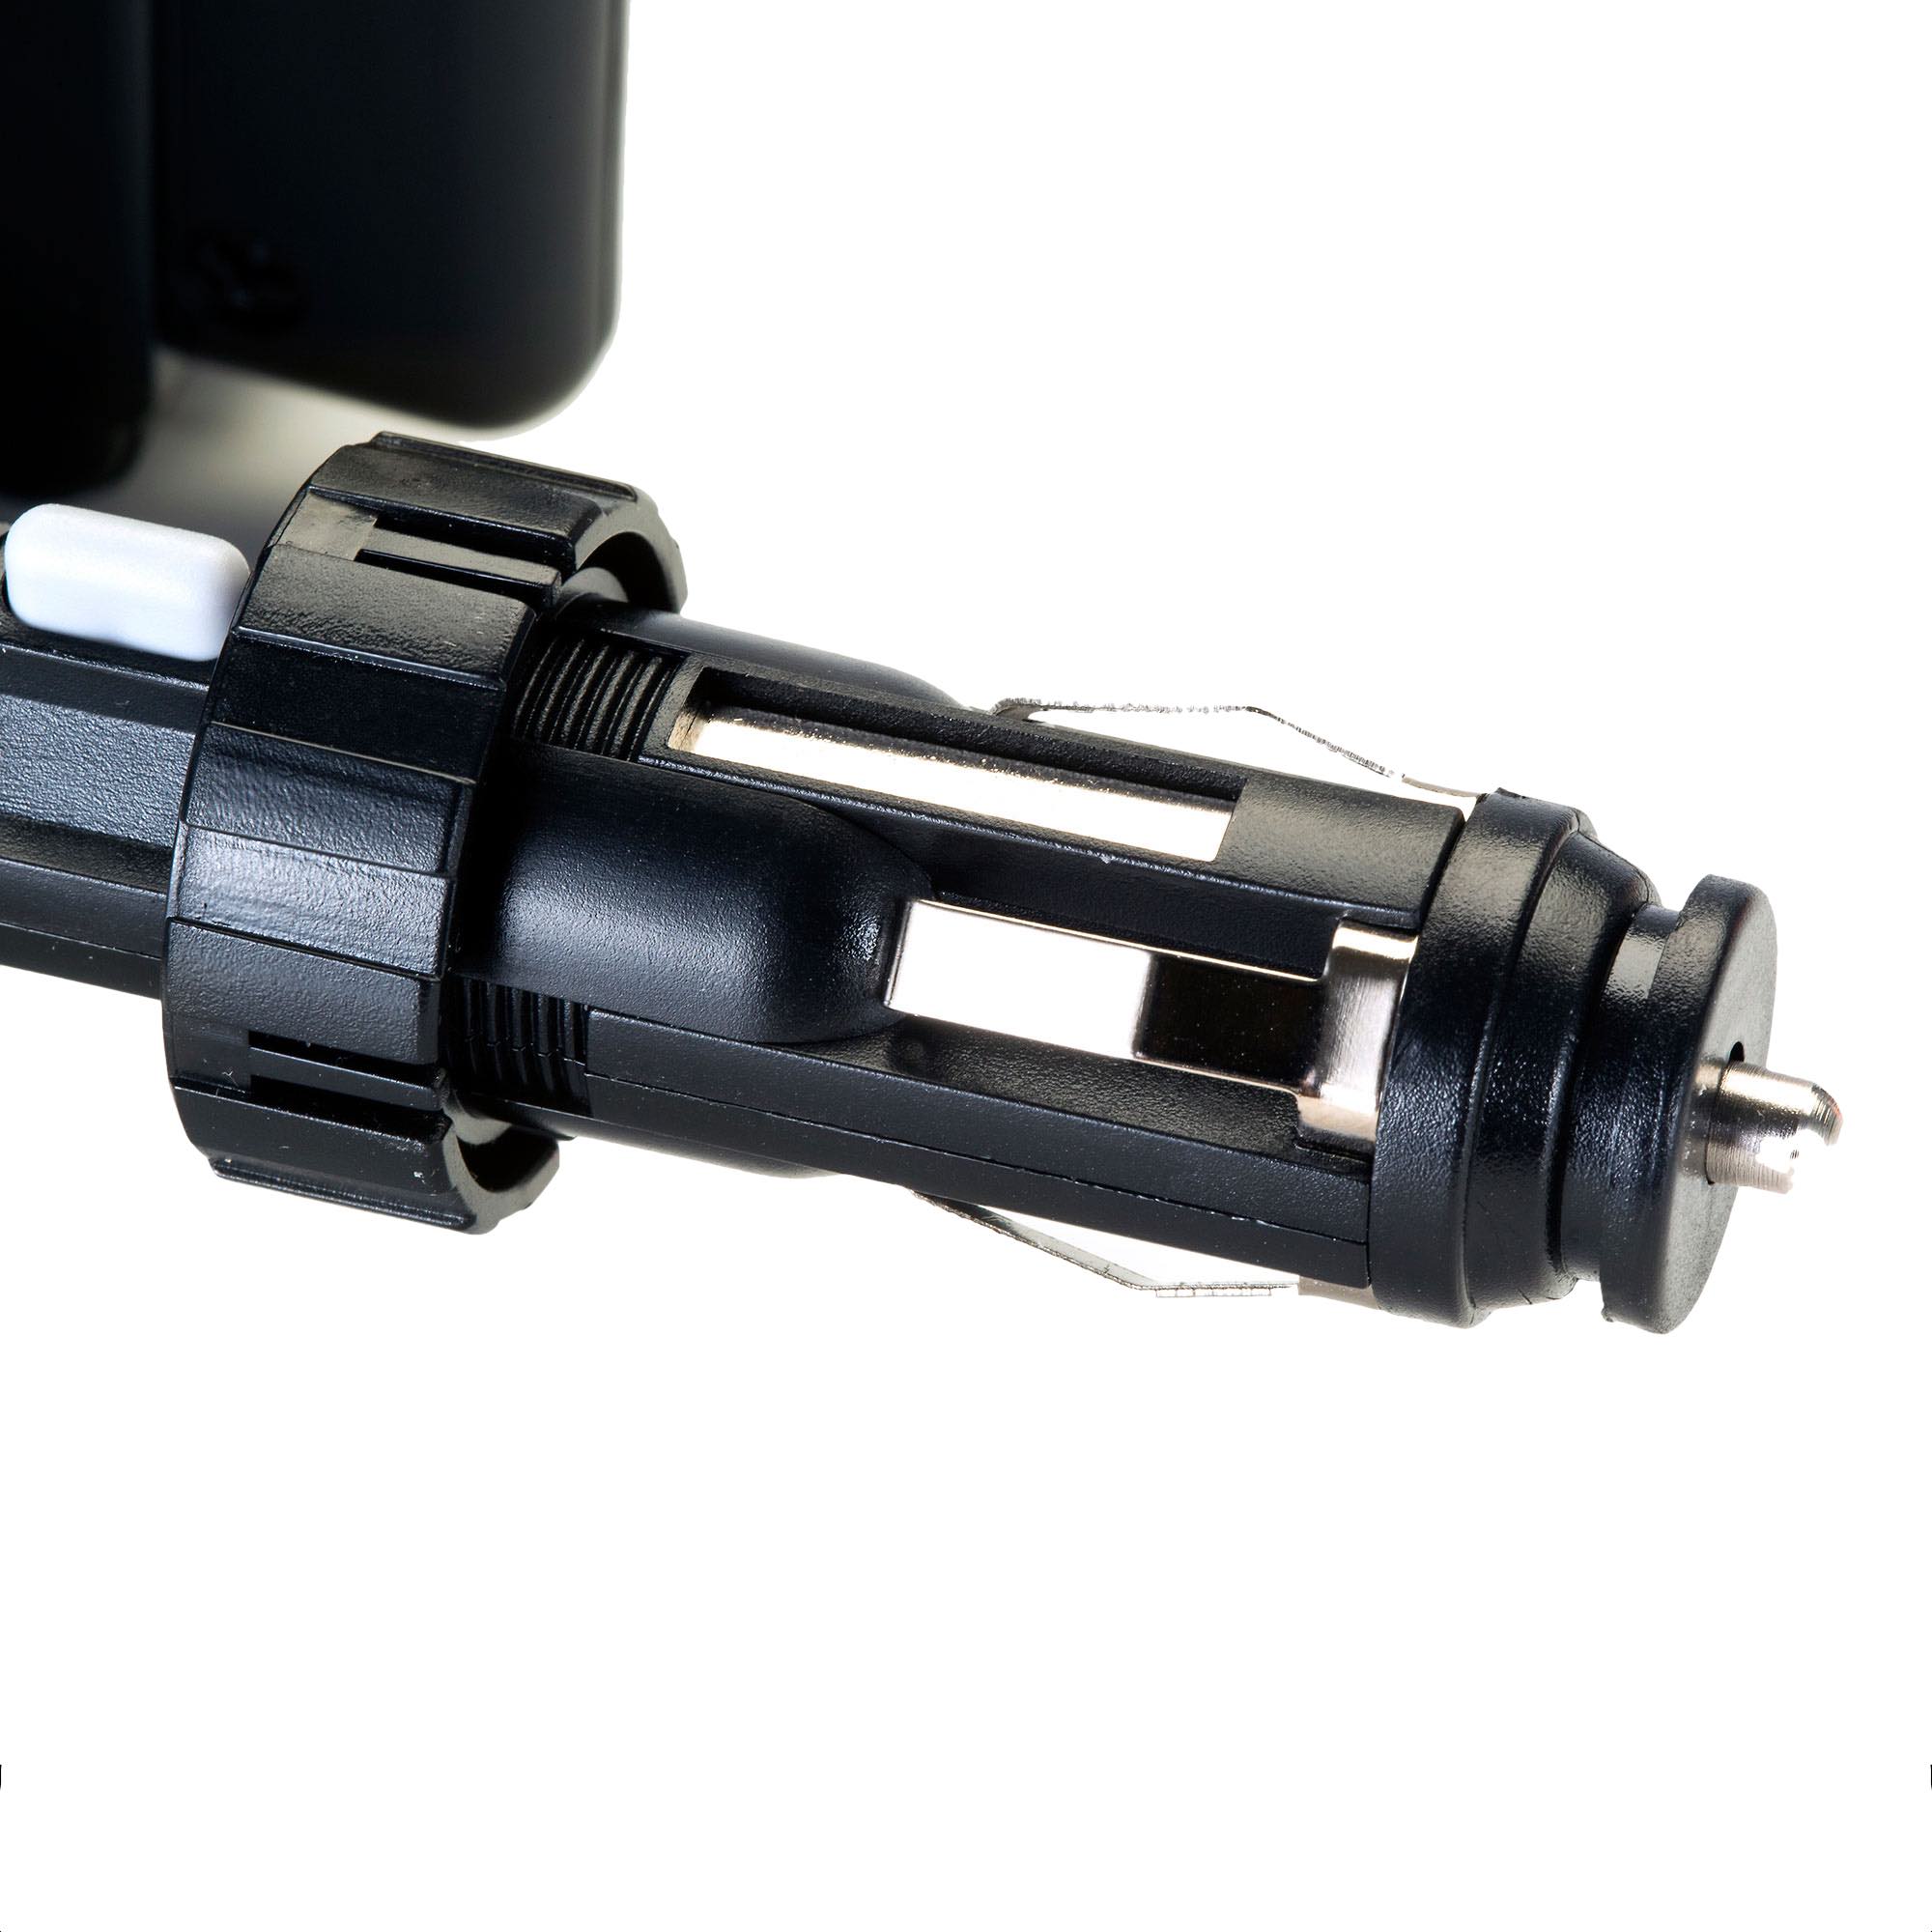 Dual USB / 12V Charger Car Cigarette Lighter Mount and Holder for the Garmin nuvi 2457 / 2497 LMT